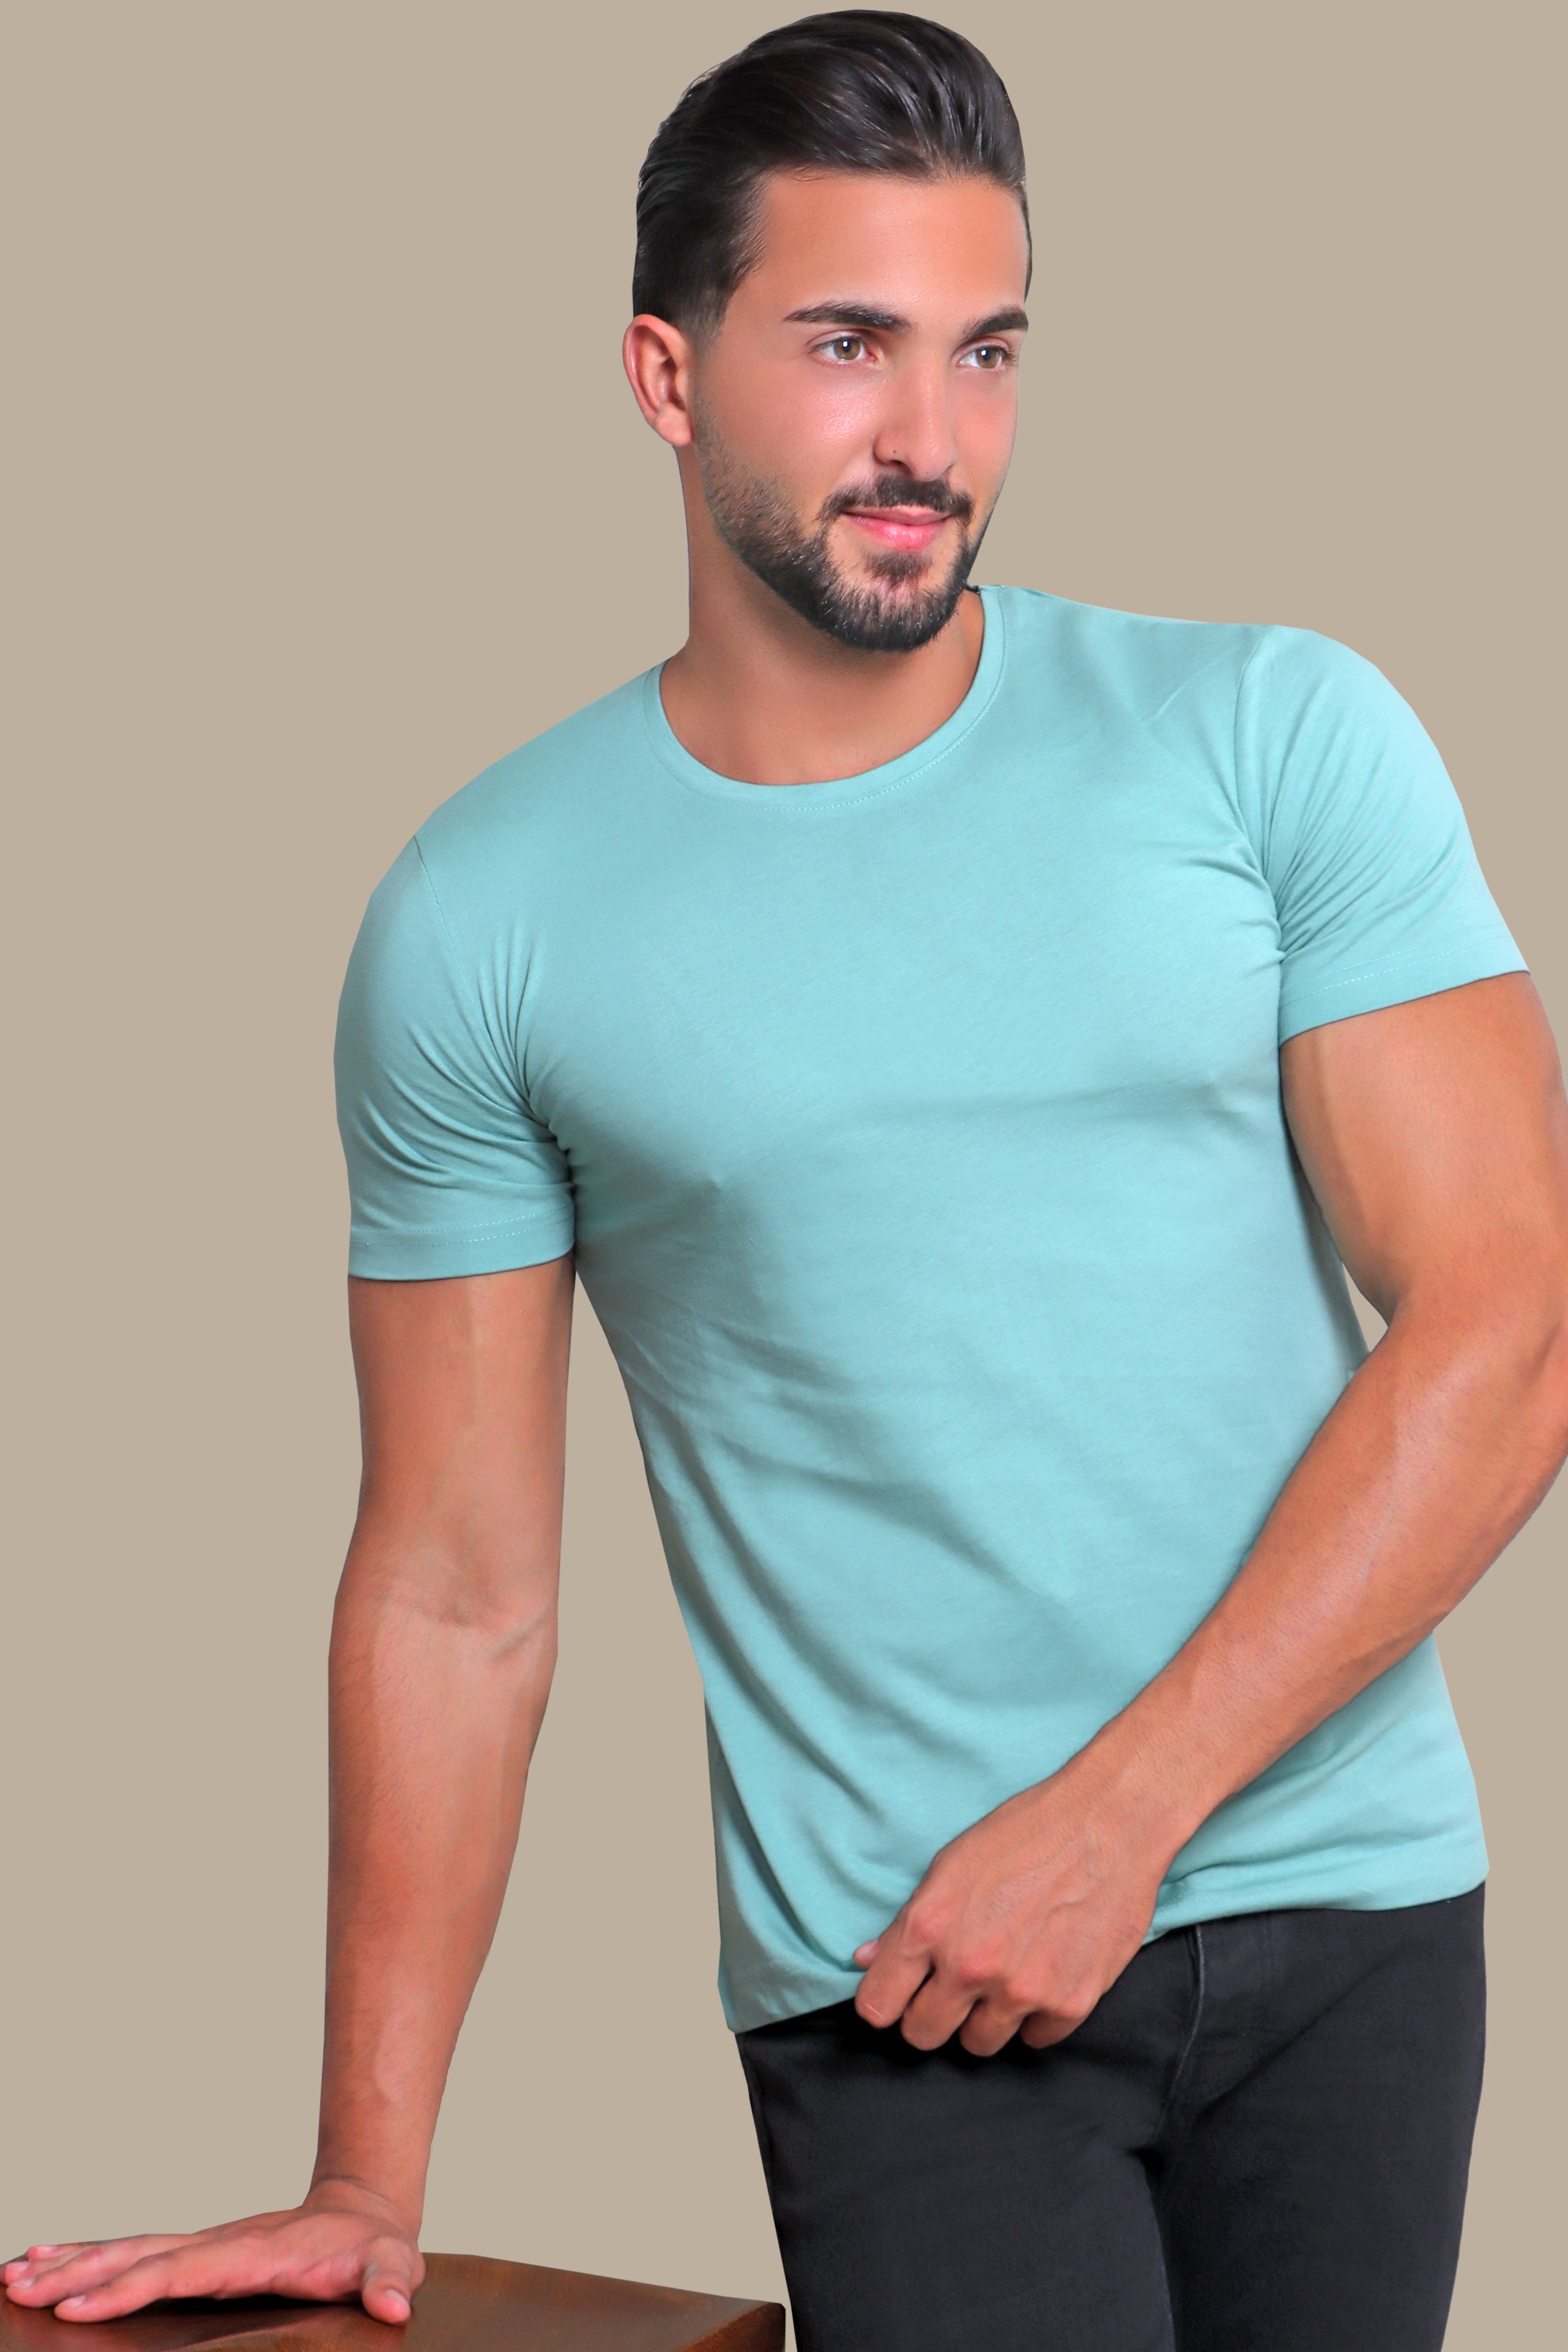 Aqua Serenity: Basic Round Neck T-shirt in Tranquil Hues